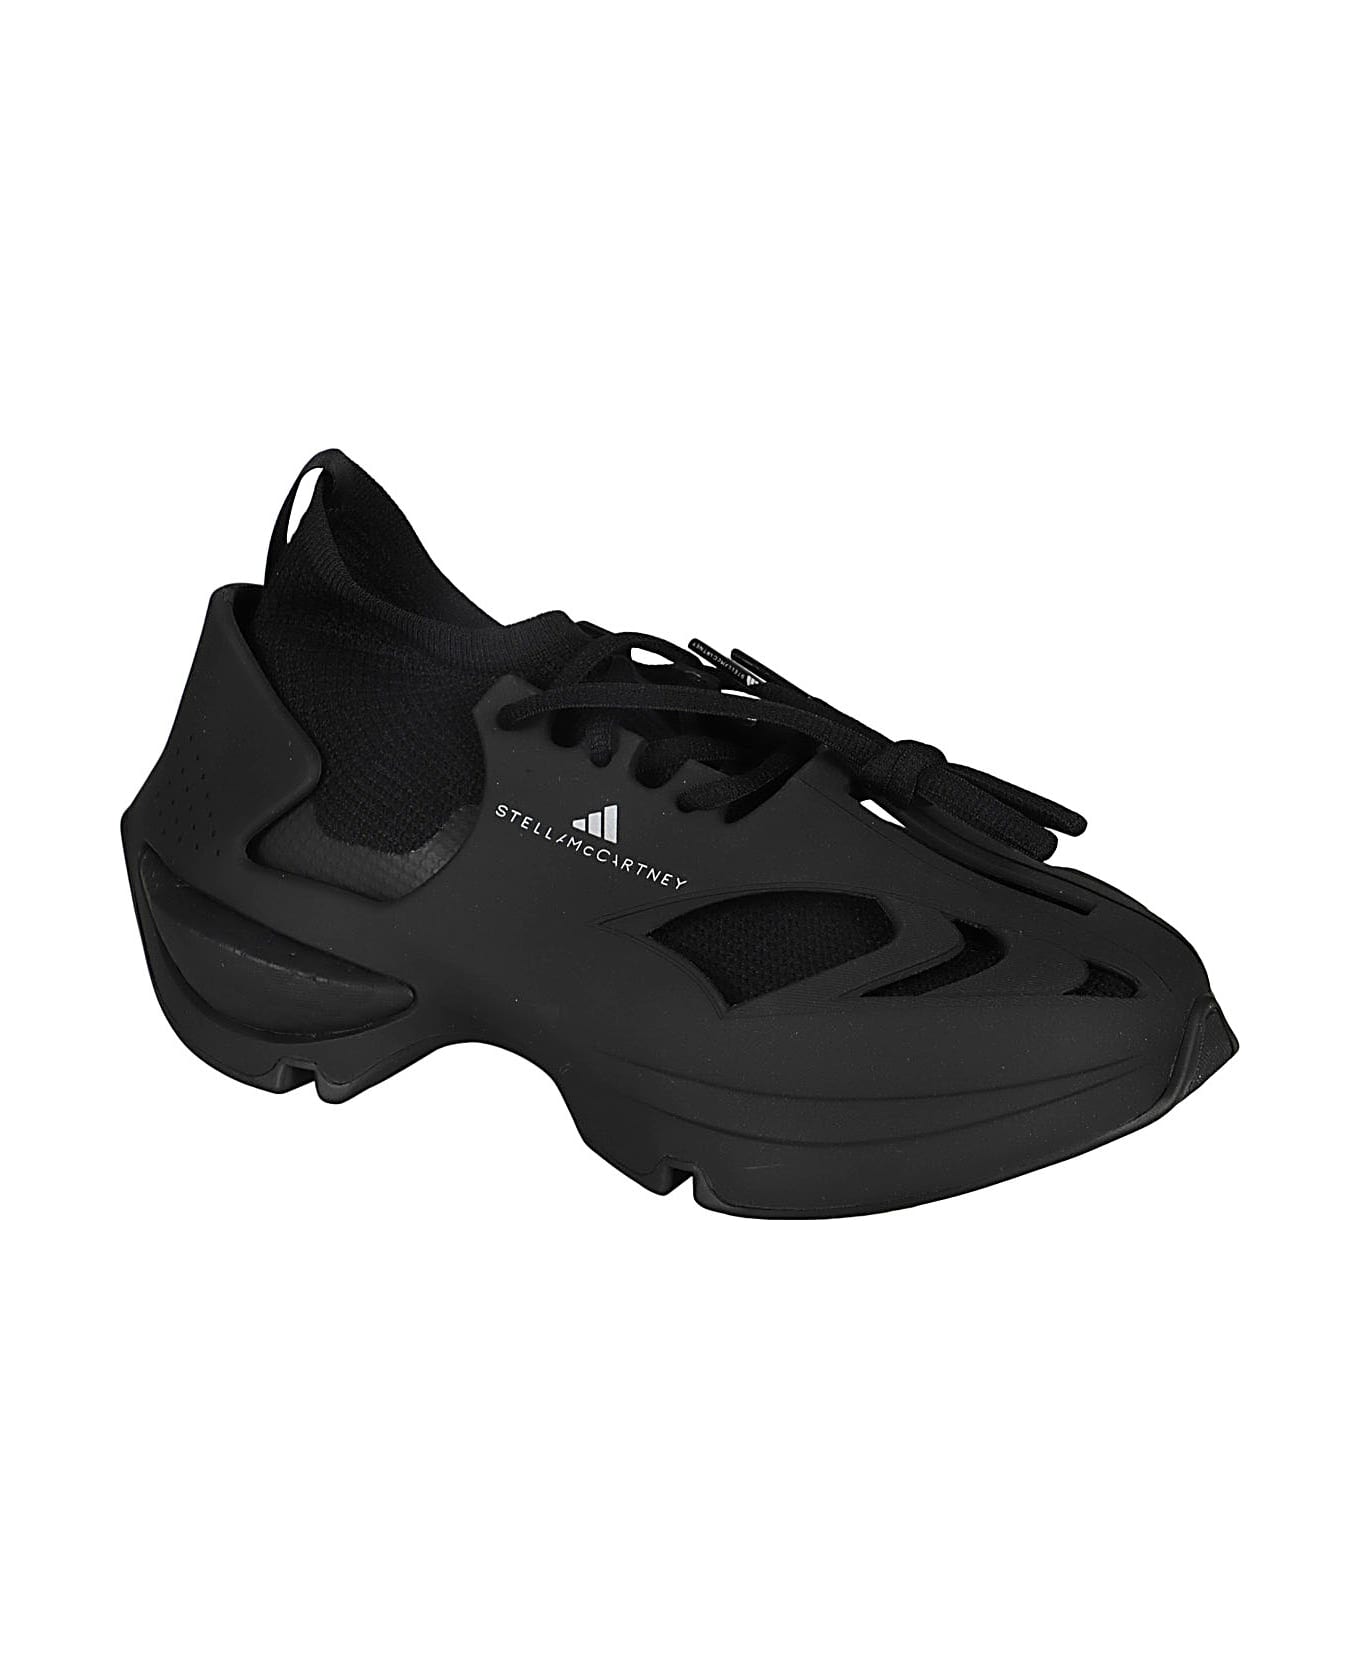 Adidas by Stella McCartney Asmc Sportwear Run - COBLFTWRWHCOBLACK